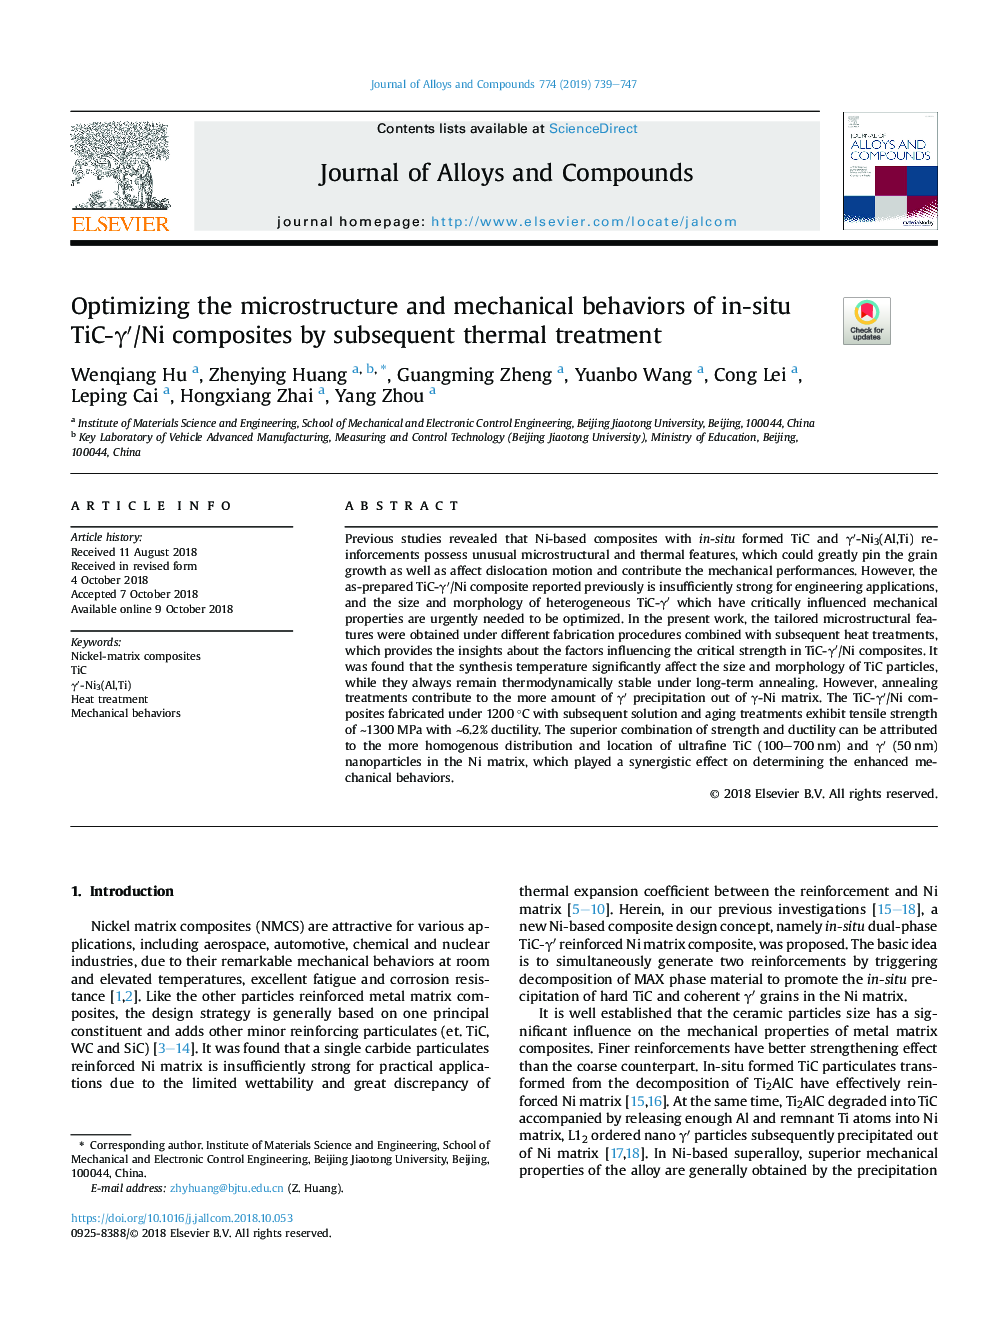 Optimizing the microstructure and mechanical behaviors of in-situ TiC-Î³â²/Ni composites by subsequent thermal treatment